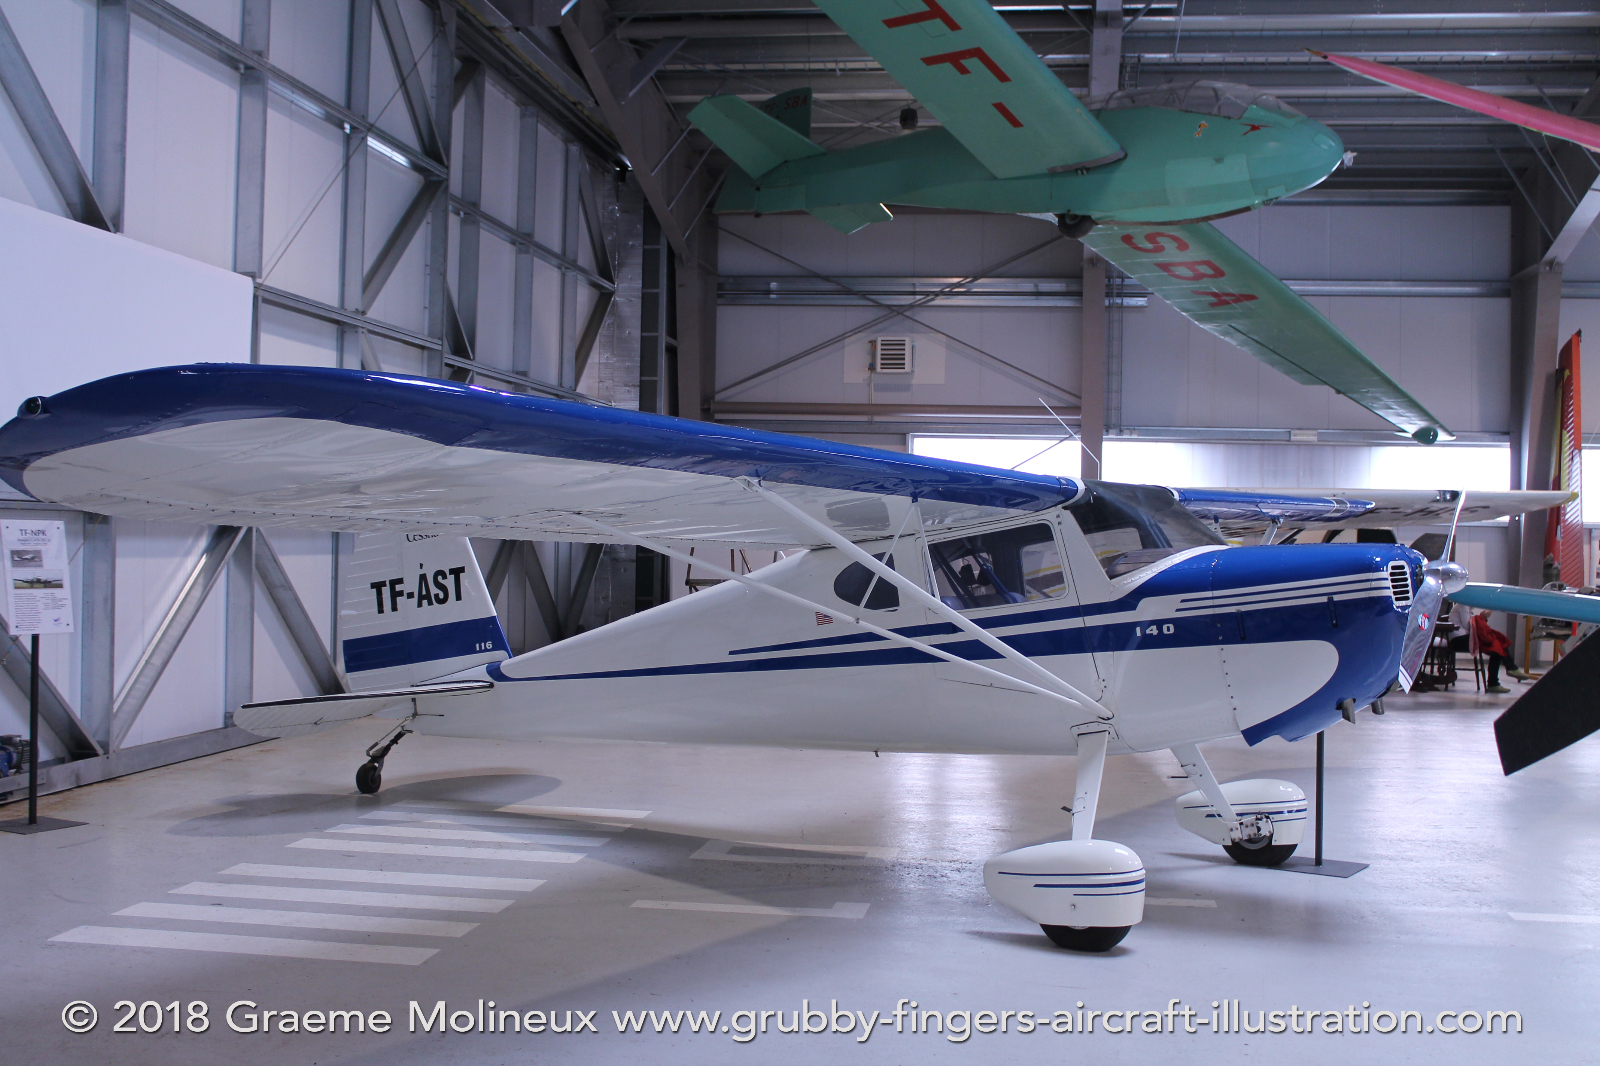 Cessna%20140%20TF-AST%20Iceland%202017%2003%20Graeme%20Molineux